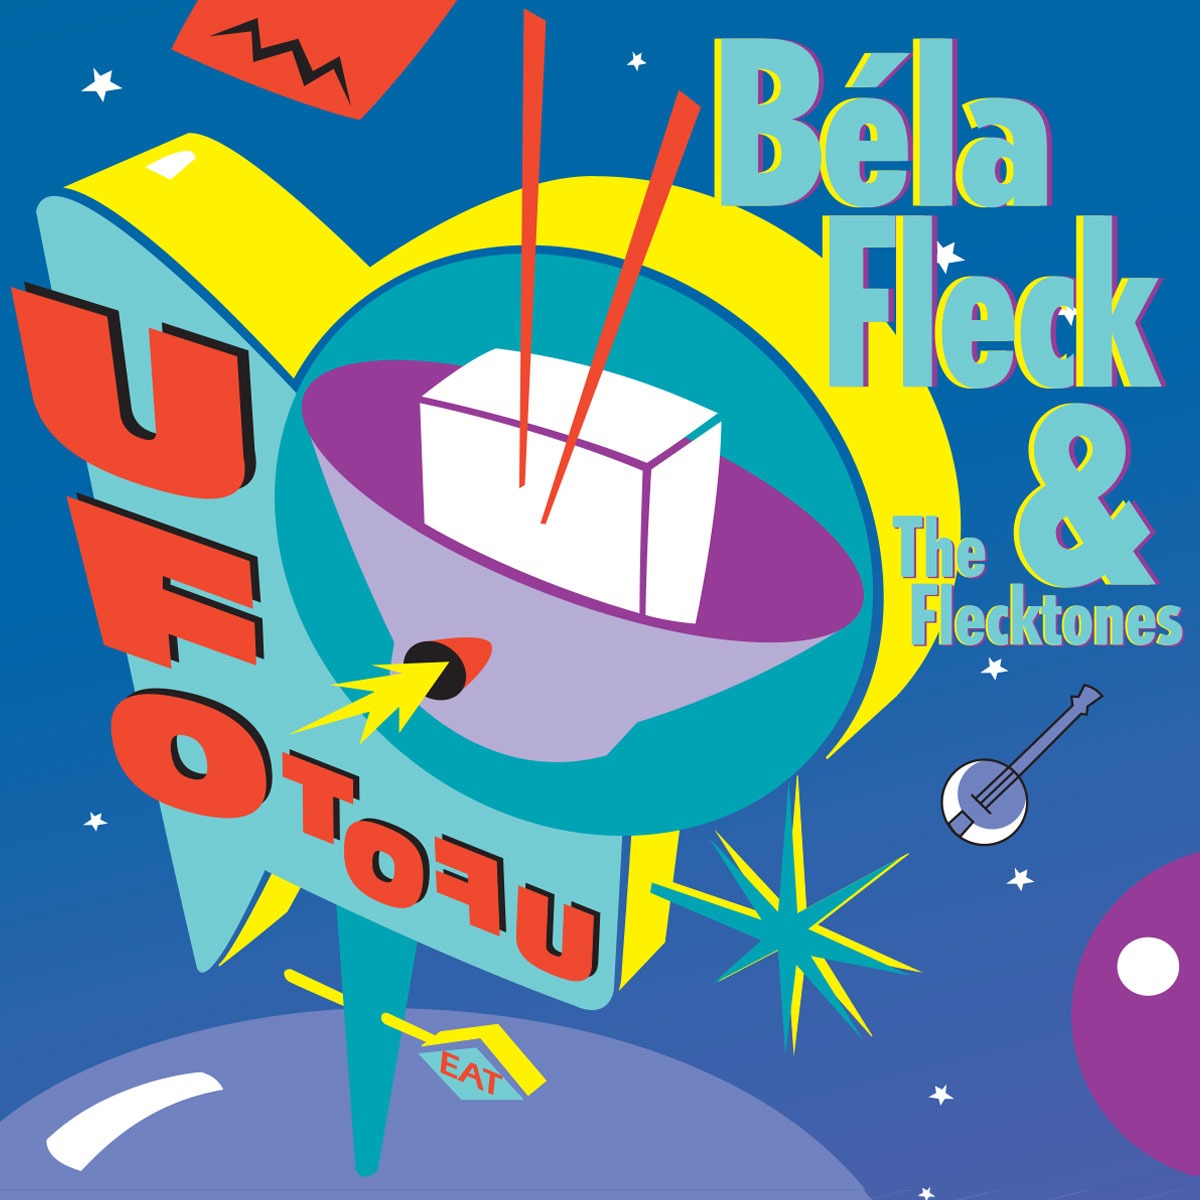 Bela Fleck compact disc graphic design by Daryl Stevens